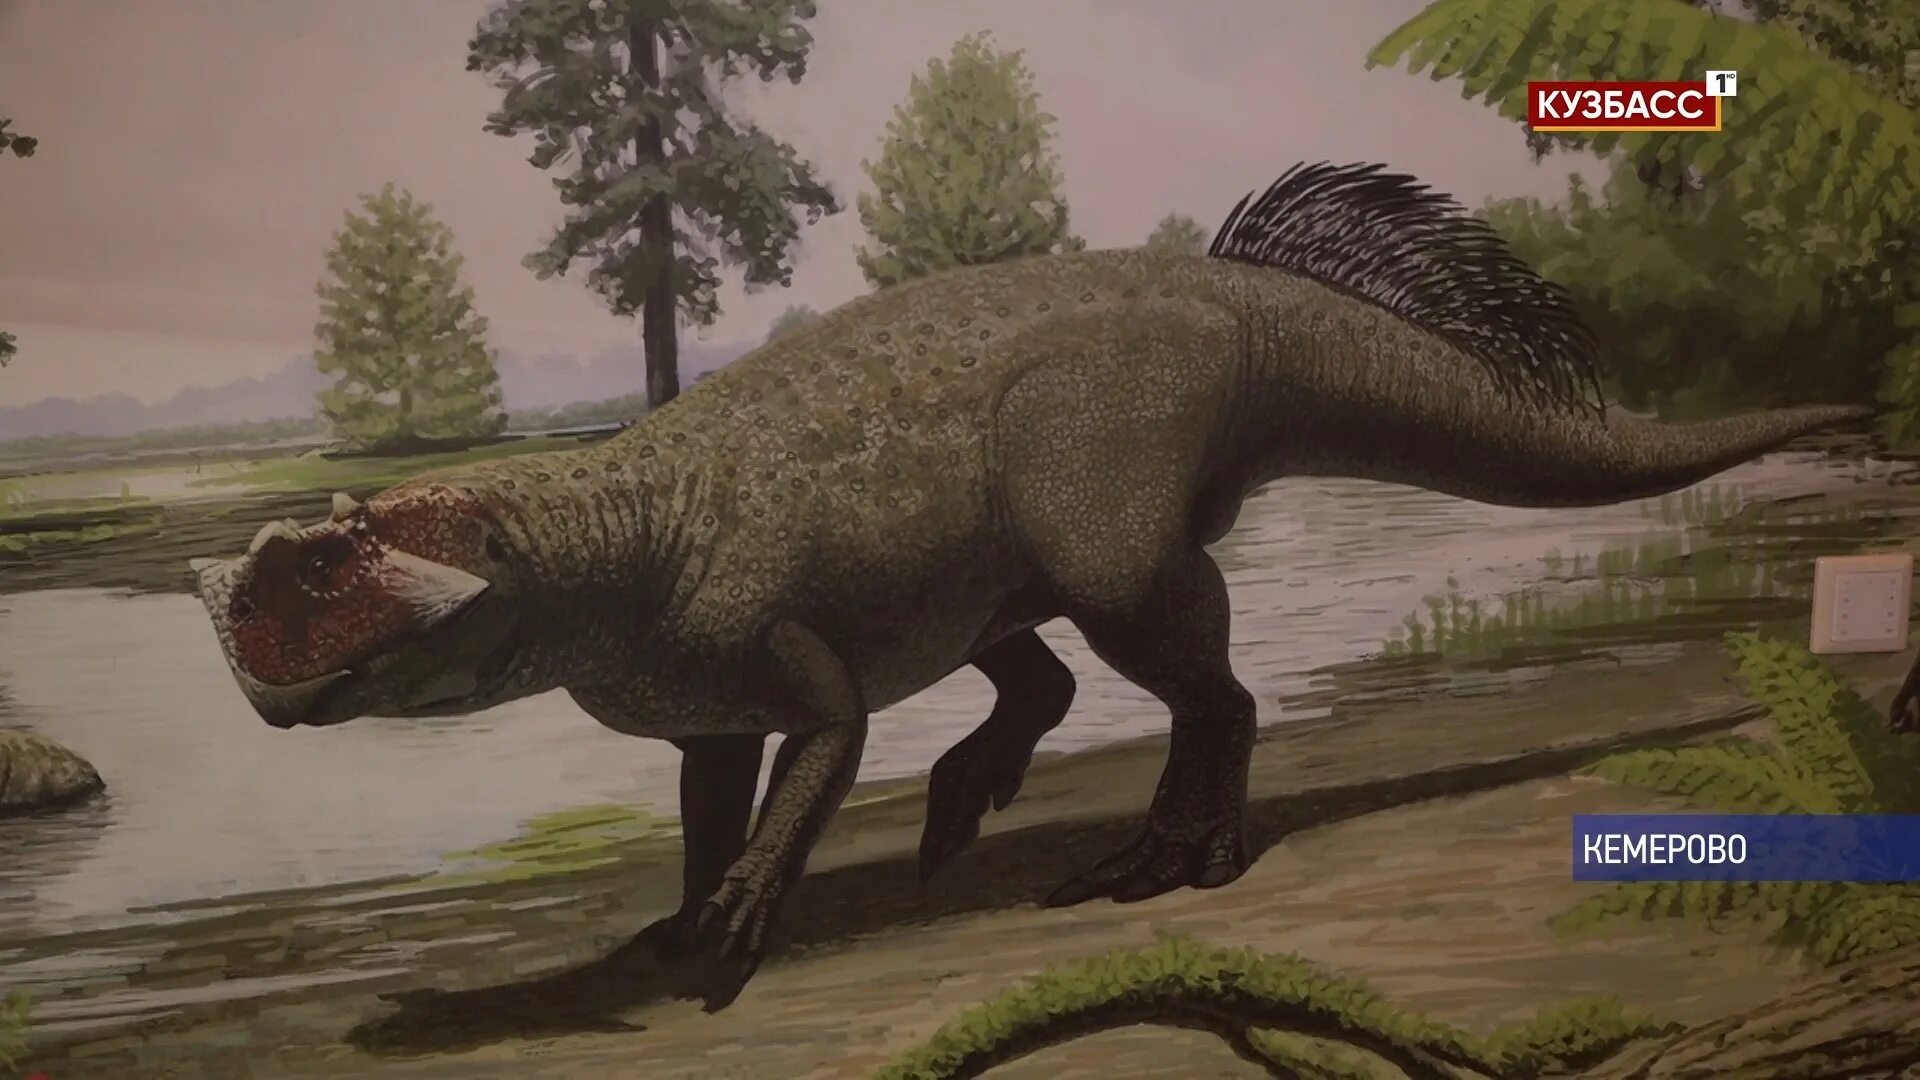 Кузбасс динозавр. Пситтакозавр Сибирский. Пситтакозавр динозавр. Пситтакозавр монгольский.